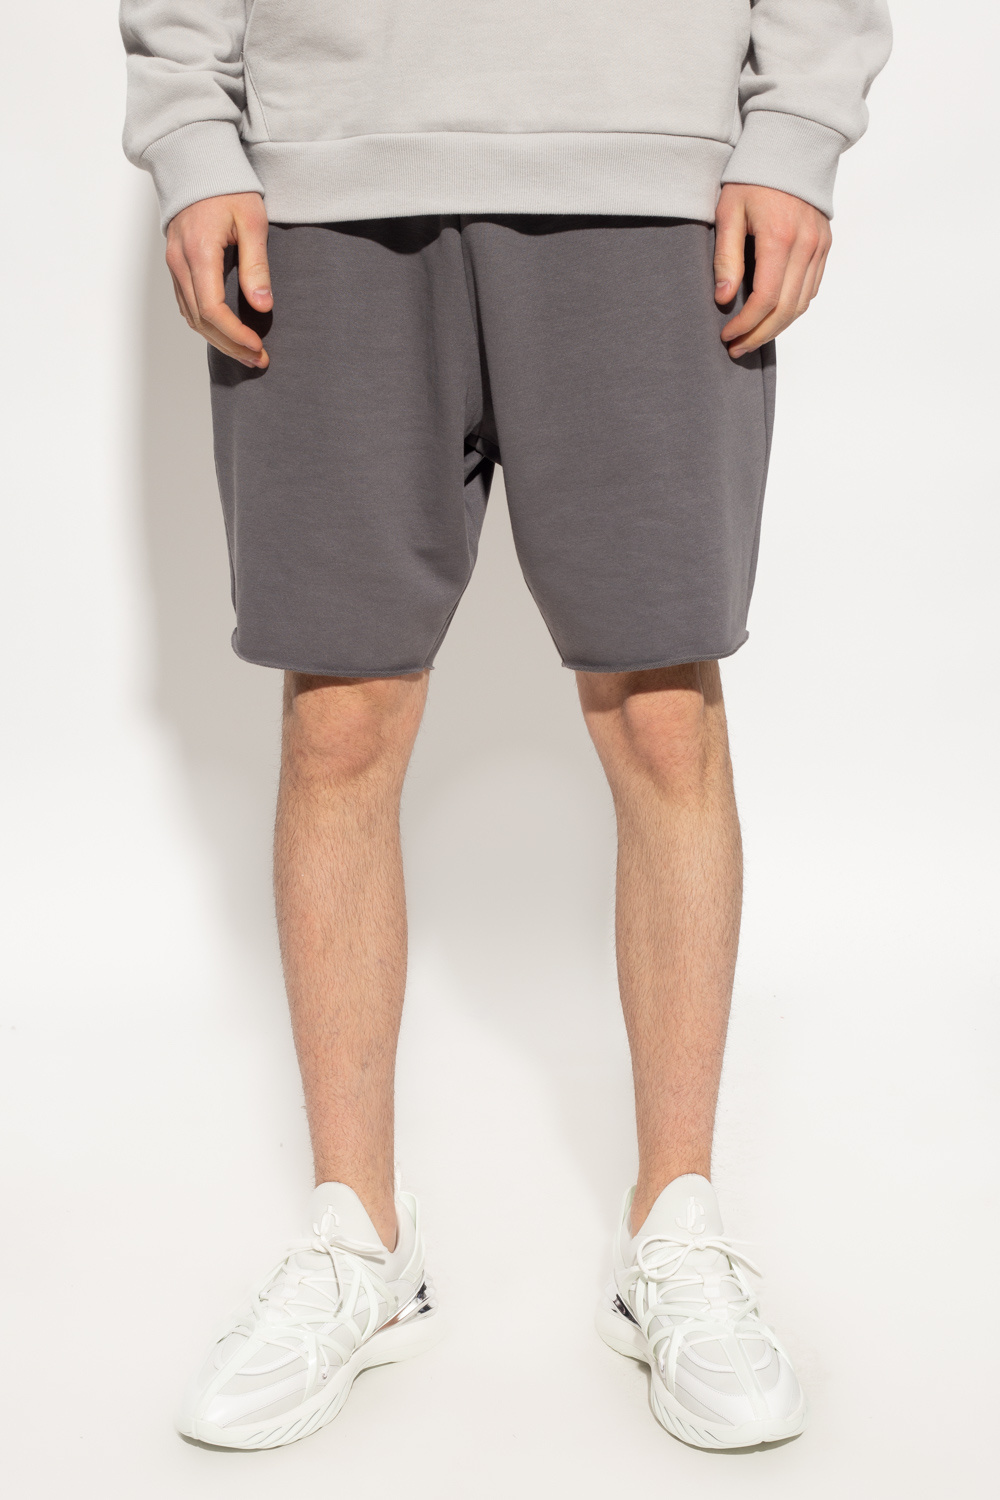 Yeezy Shorts 